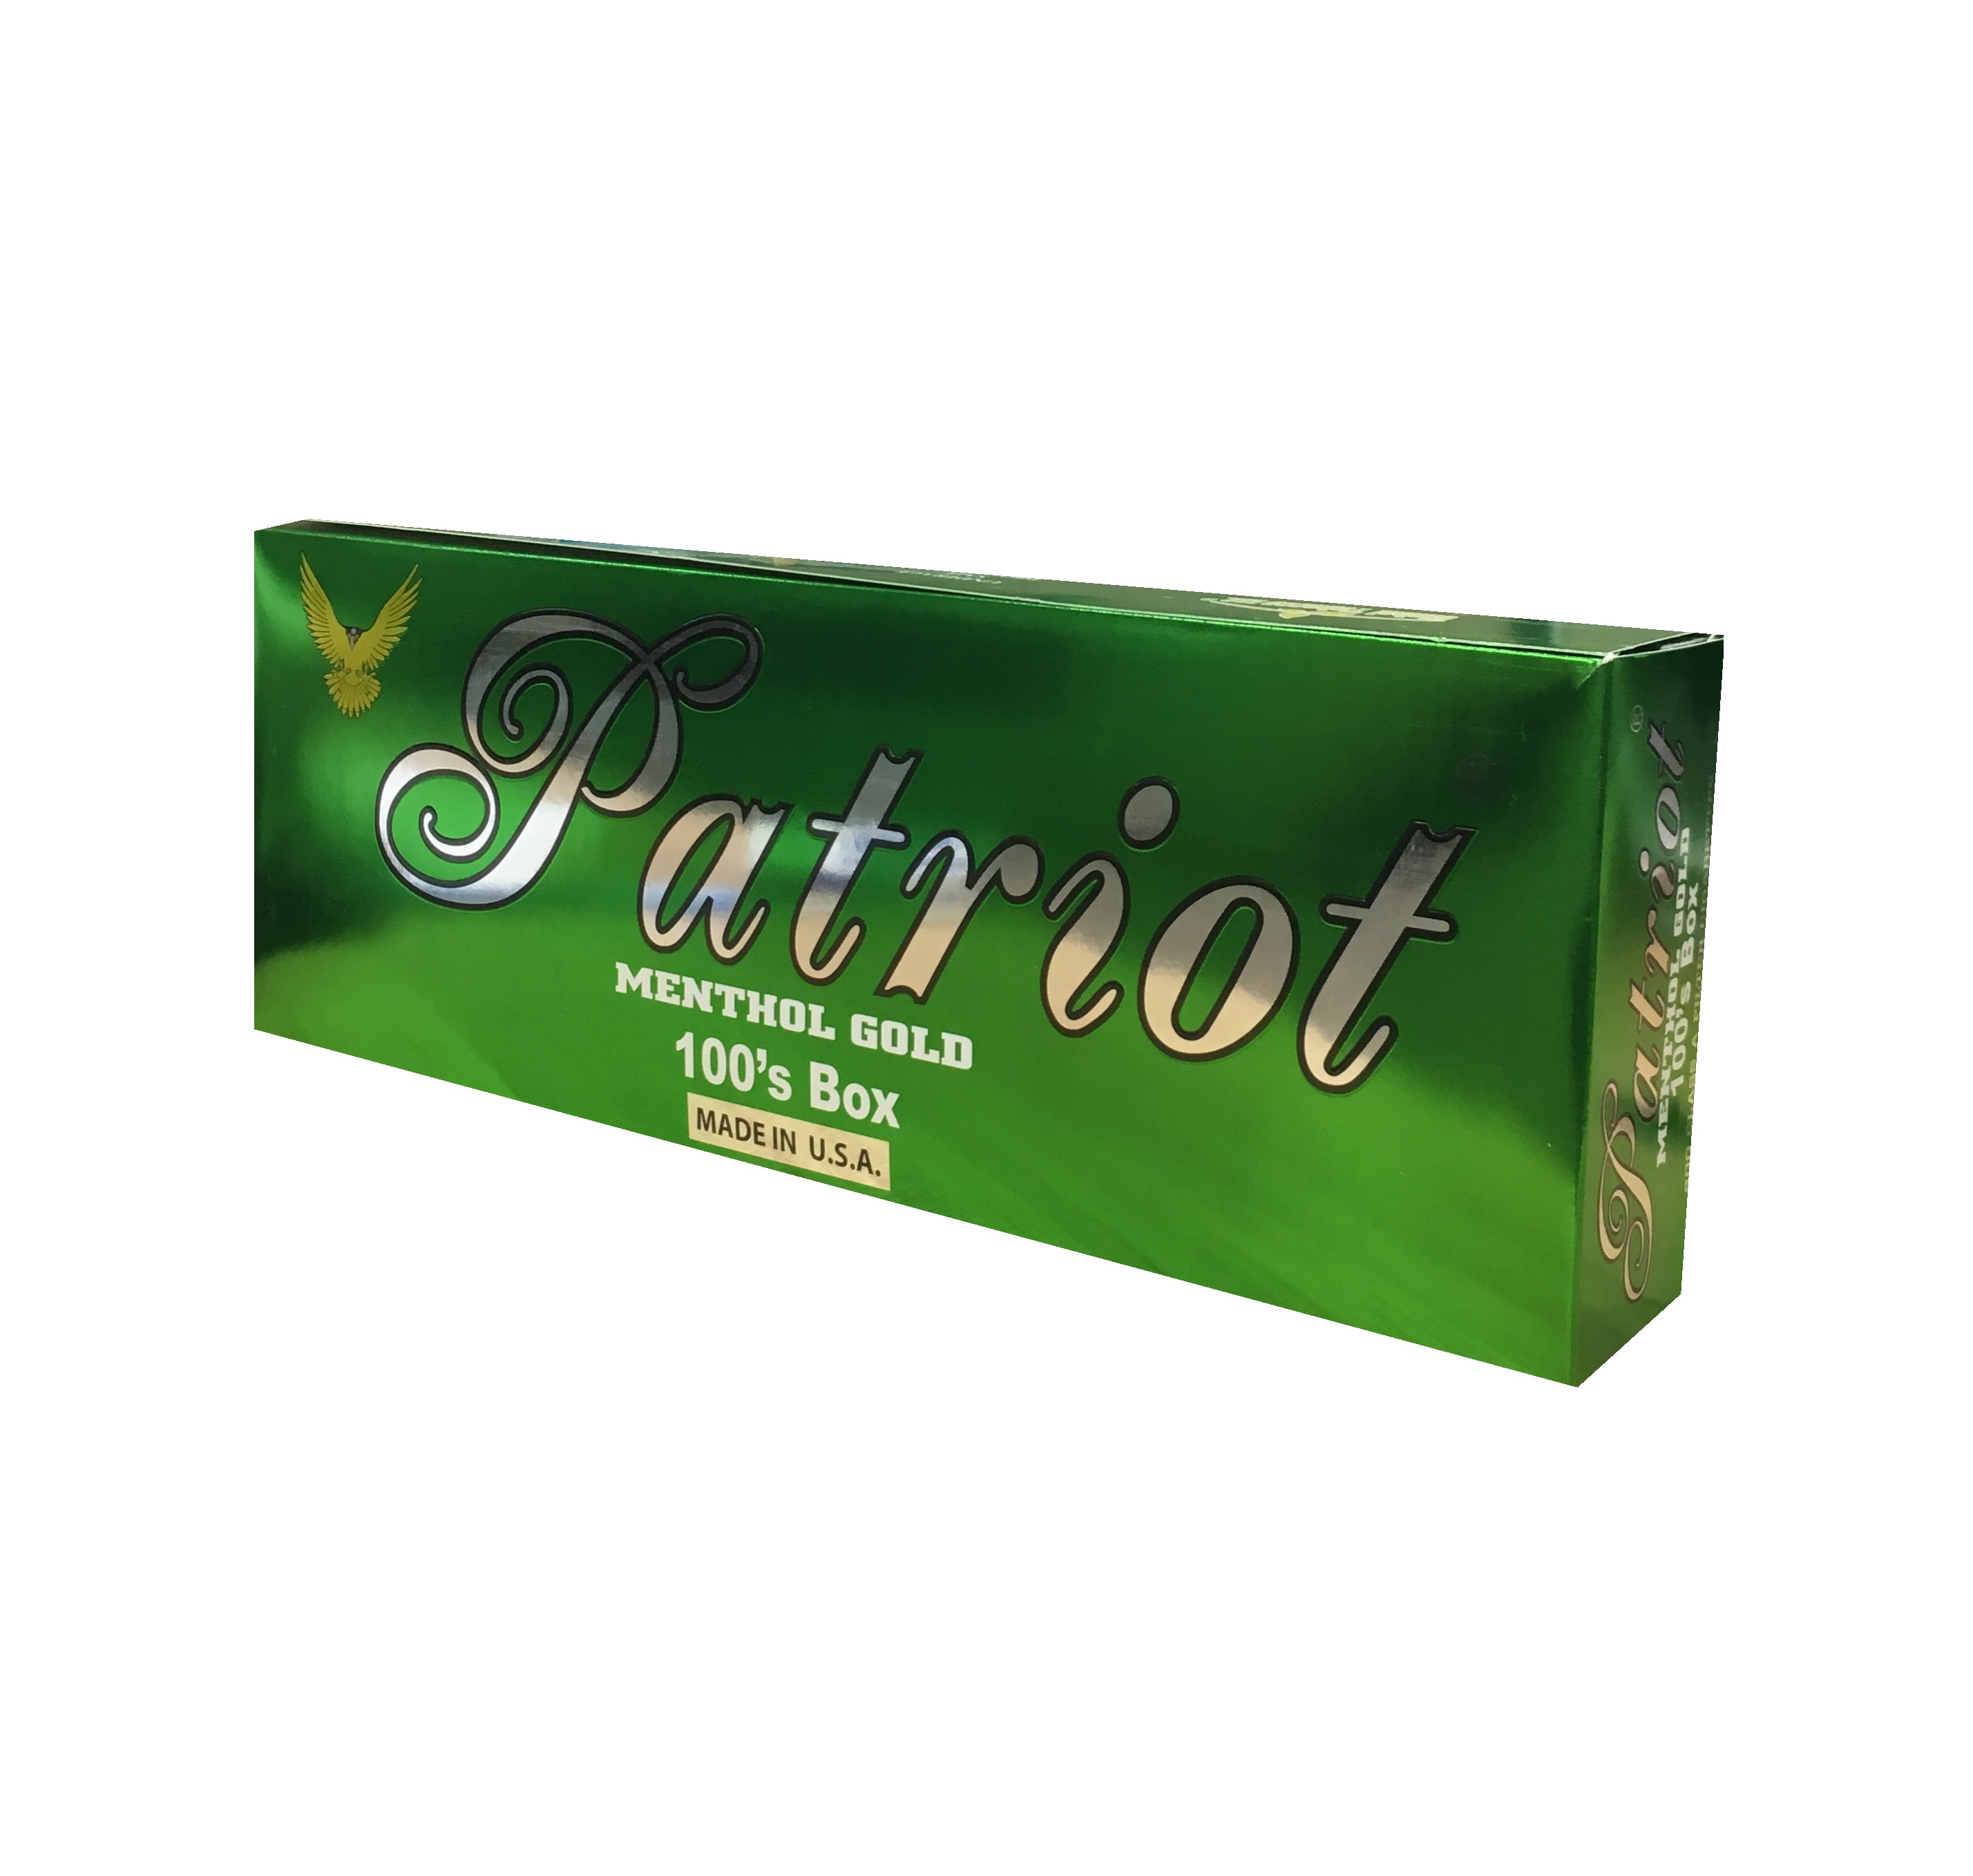 Patriot menthol gold 100 box